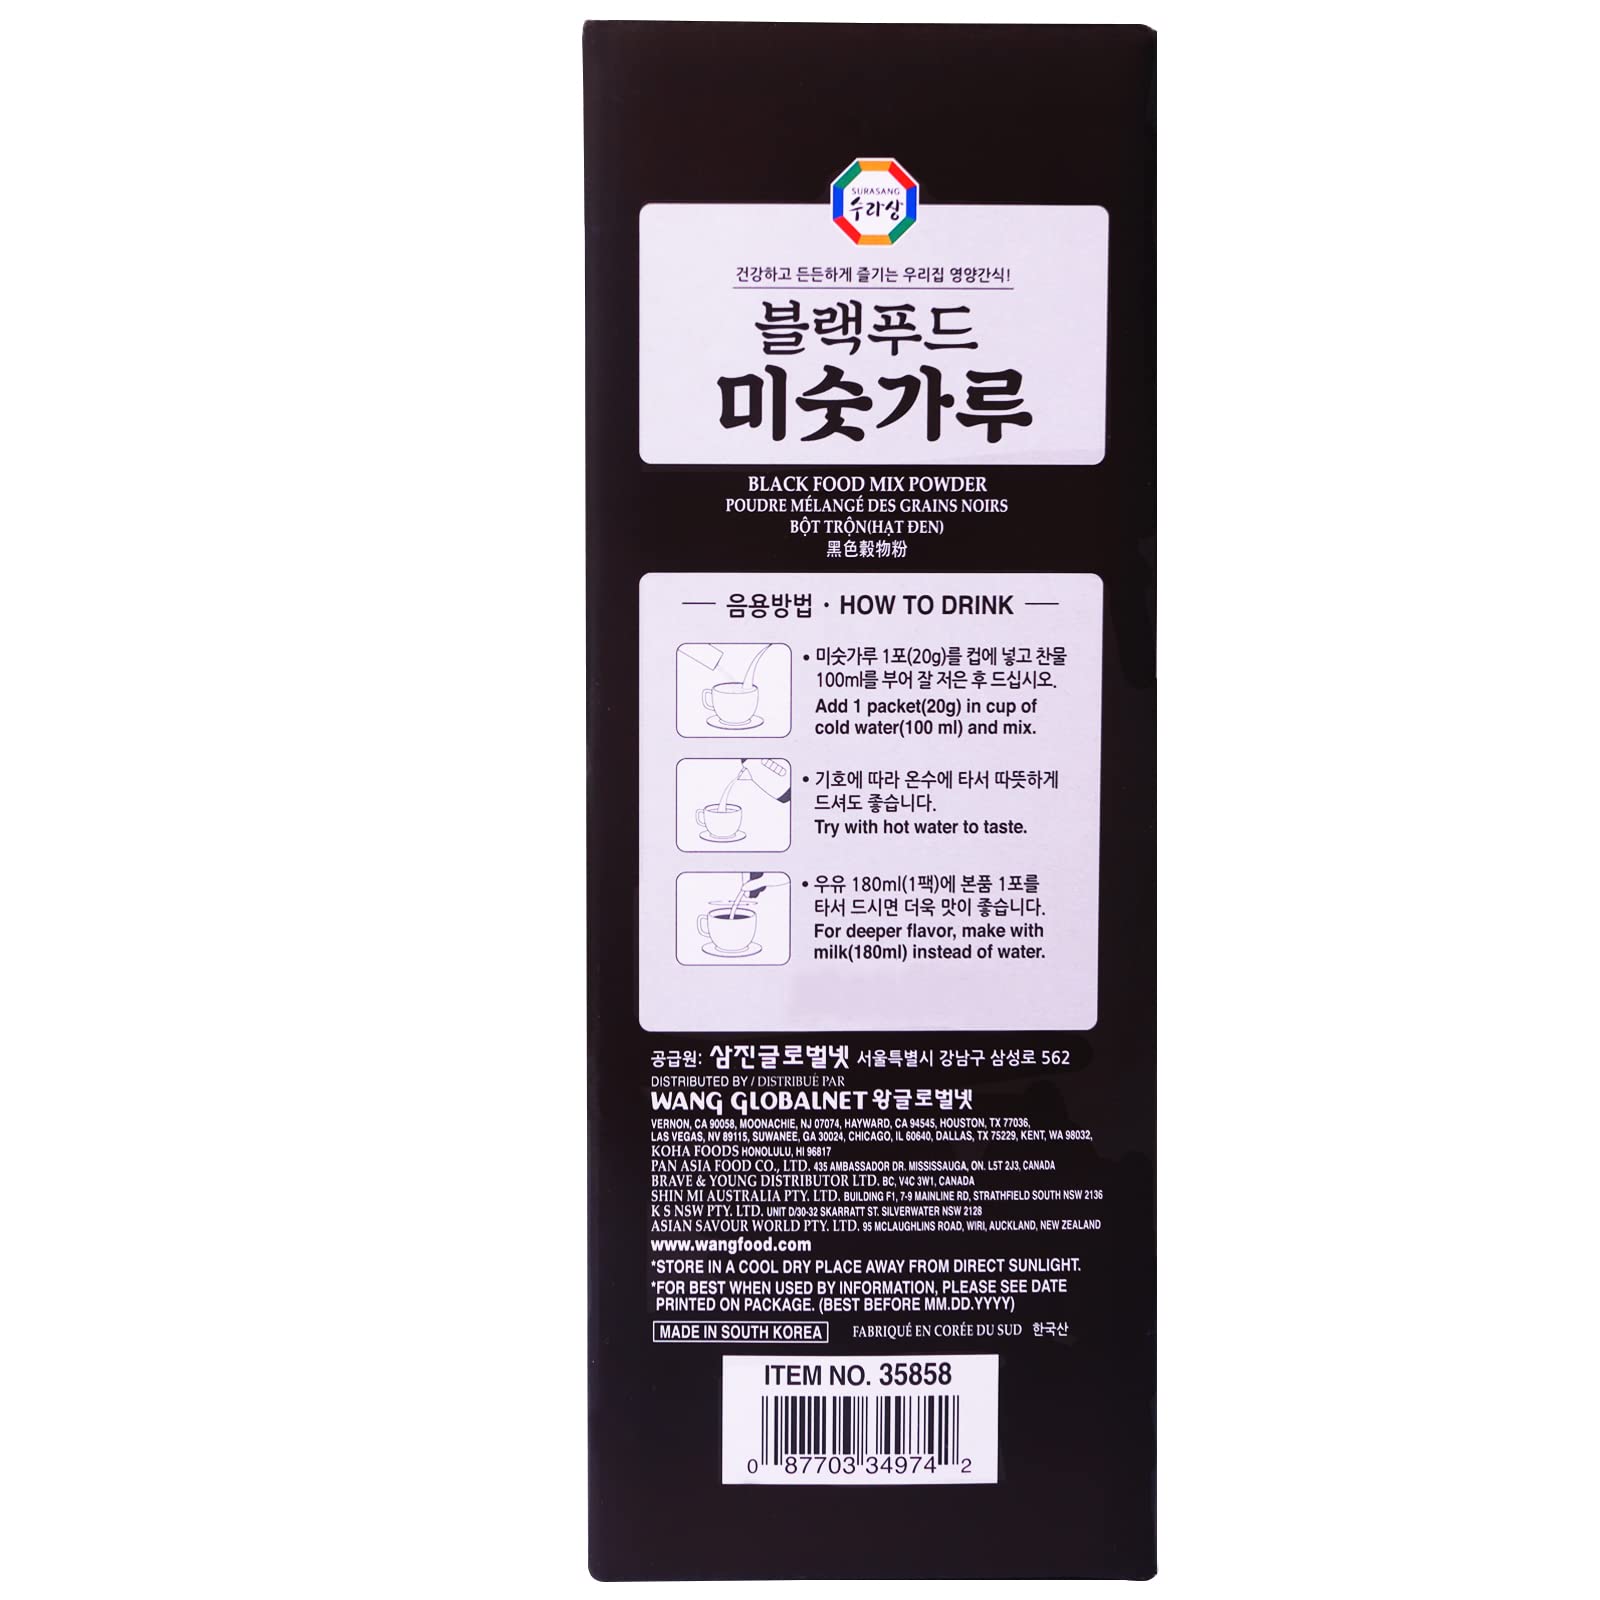 Surasang Black Food Mix Powder - 0.7oz x 40